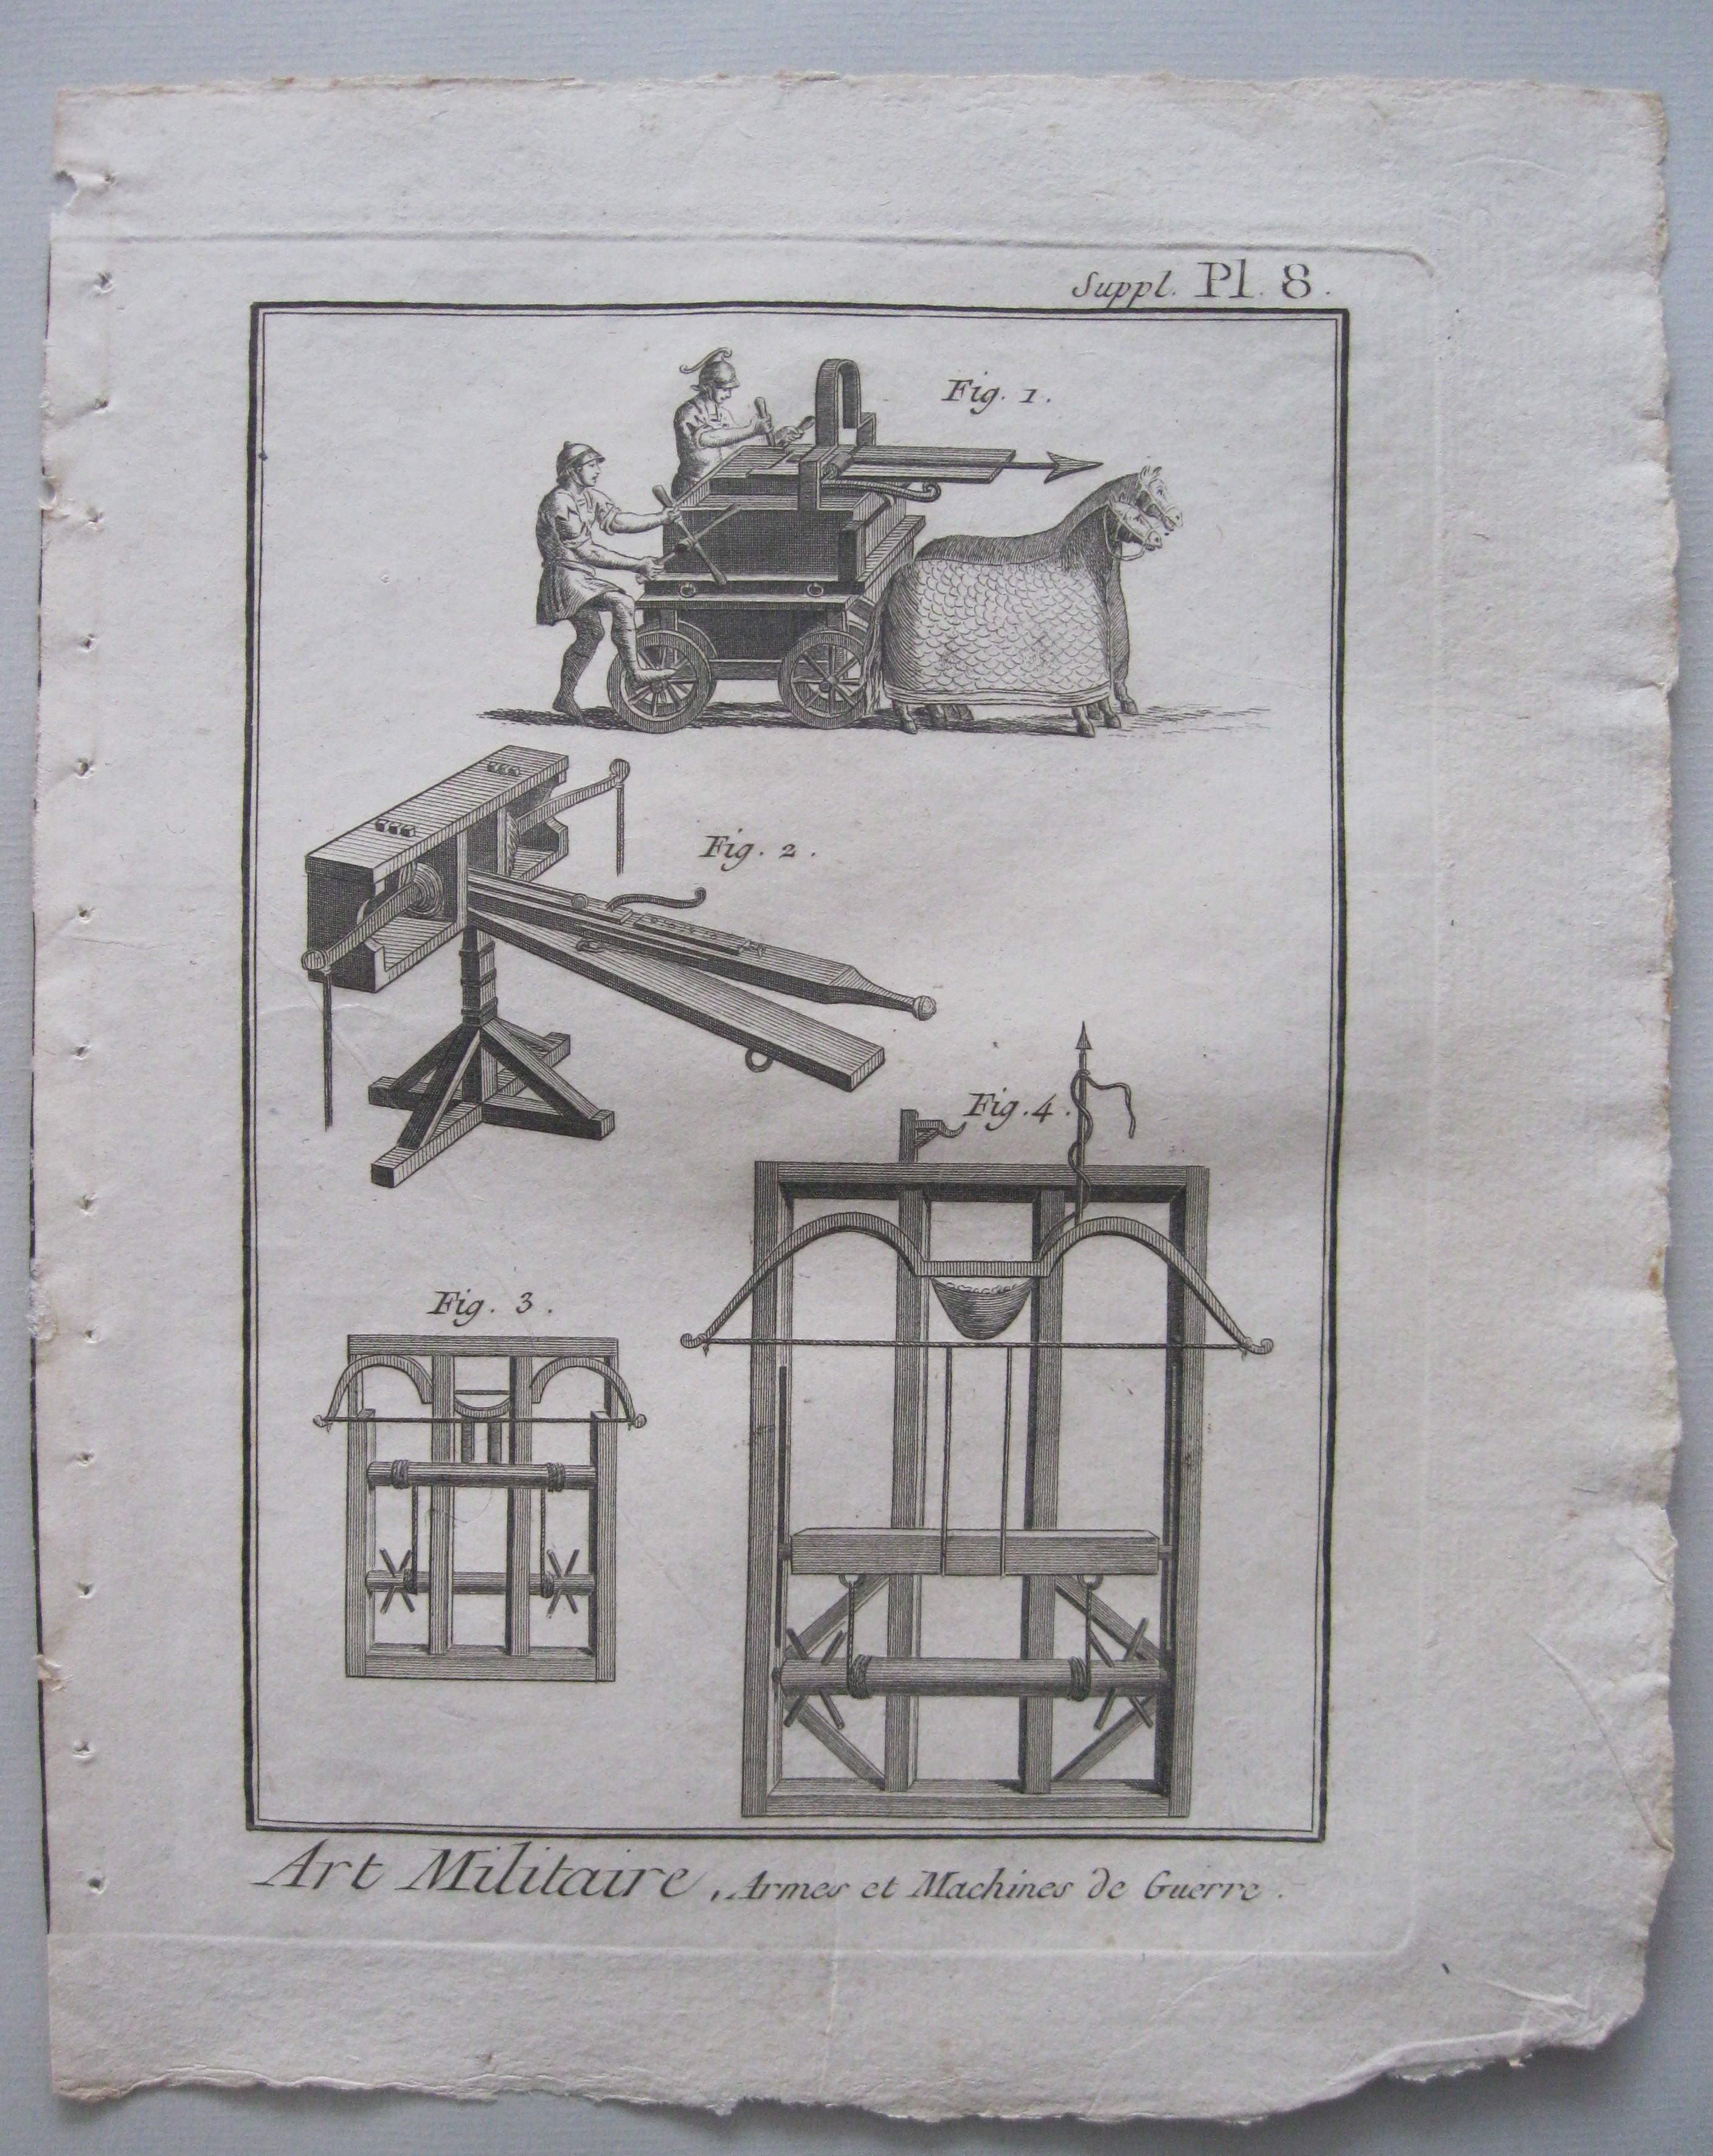 Arte militar X.Armas y máquinas de guerra.Diderot et D'Alembert, 1779